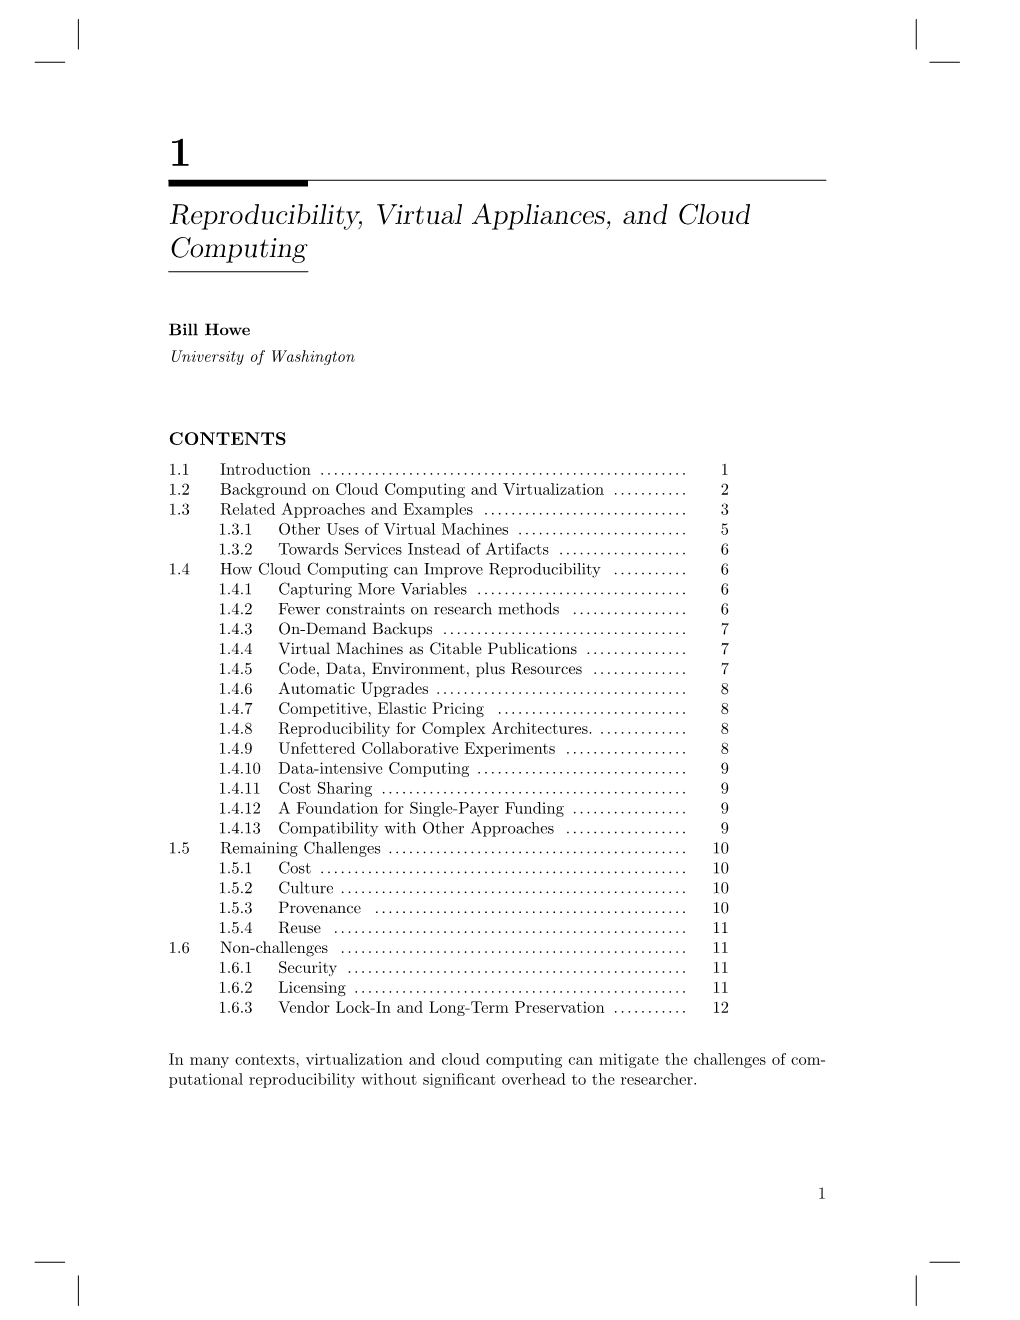 Reproducibility, Virtual Appliances, and Cloud Computing